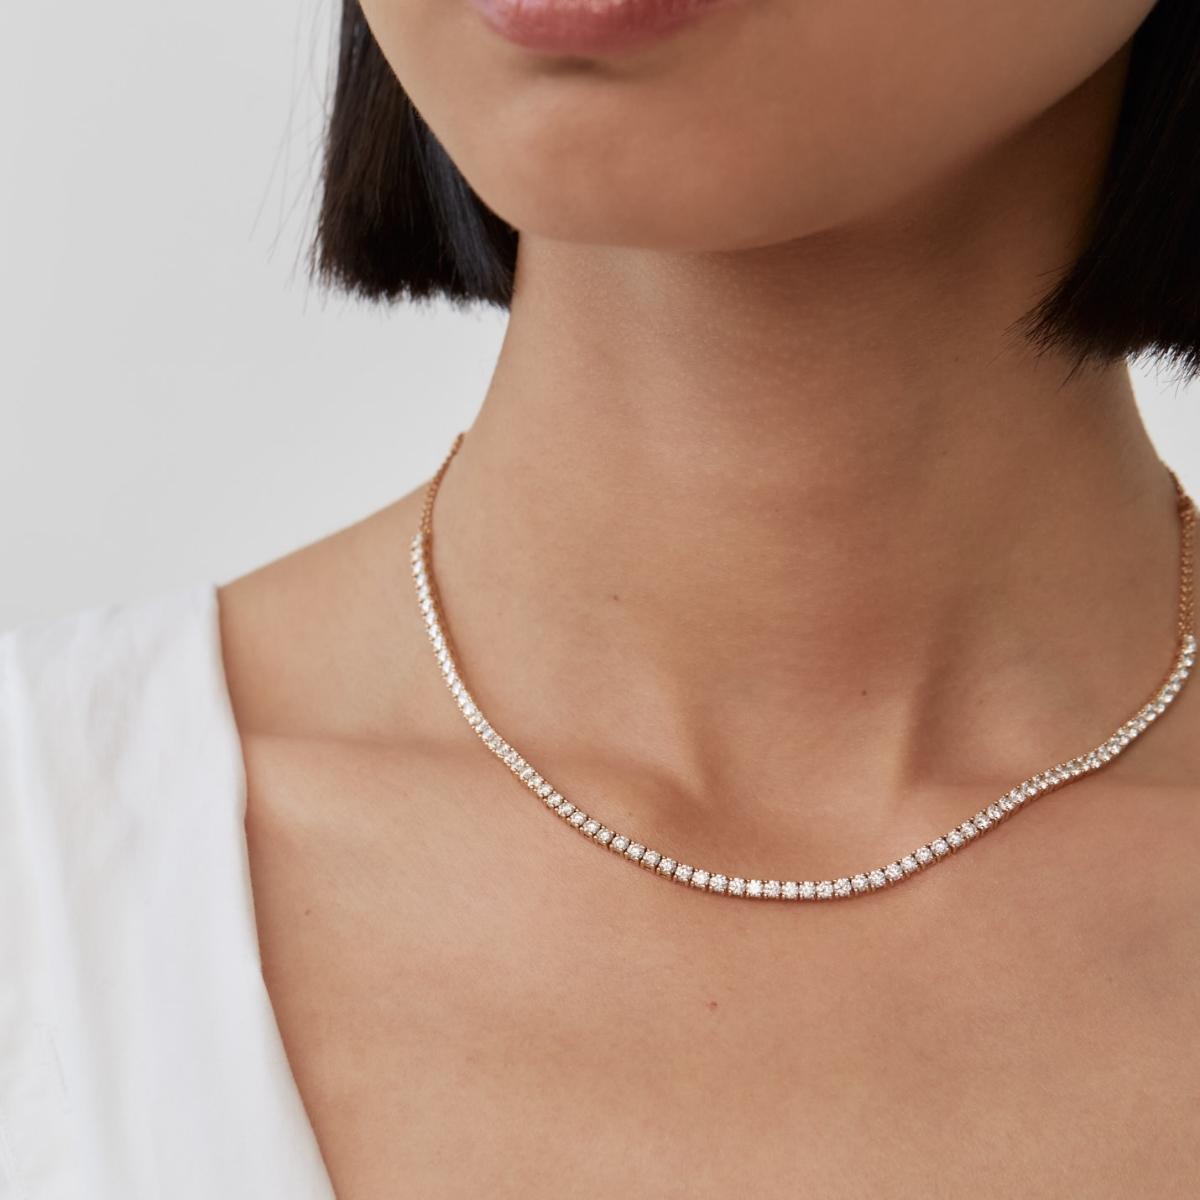 21.06 Carats Diamond Riviera Necklace in Platinum